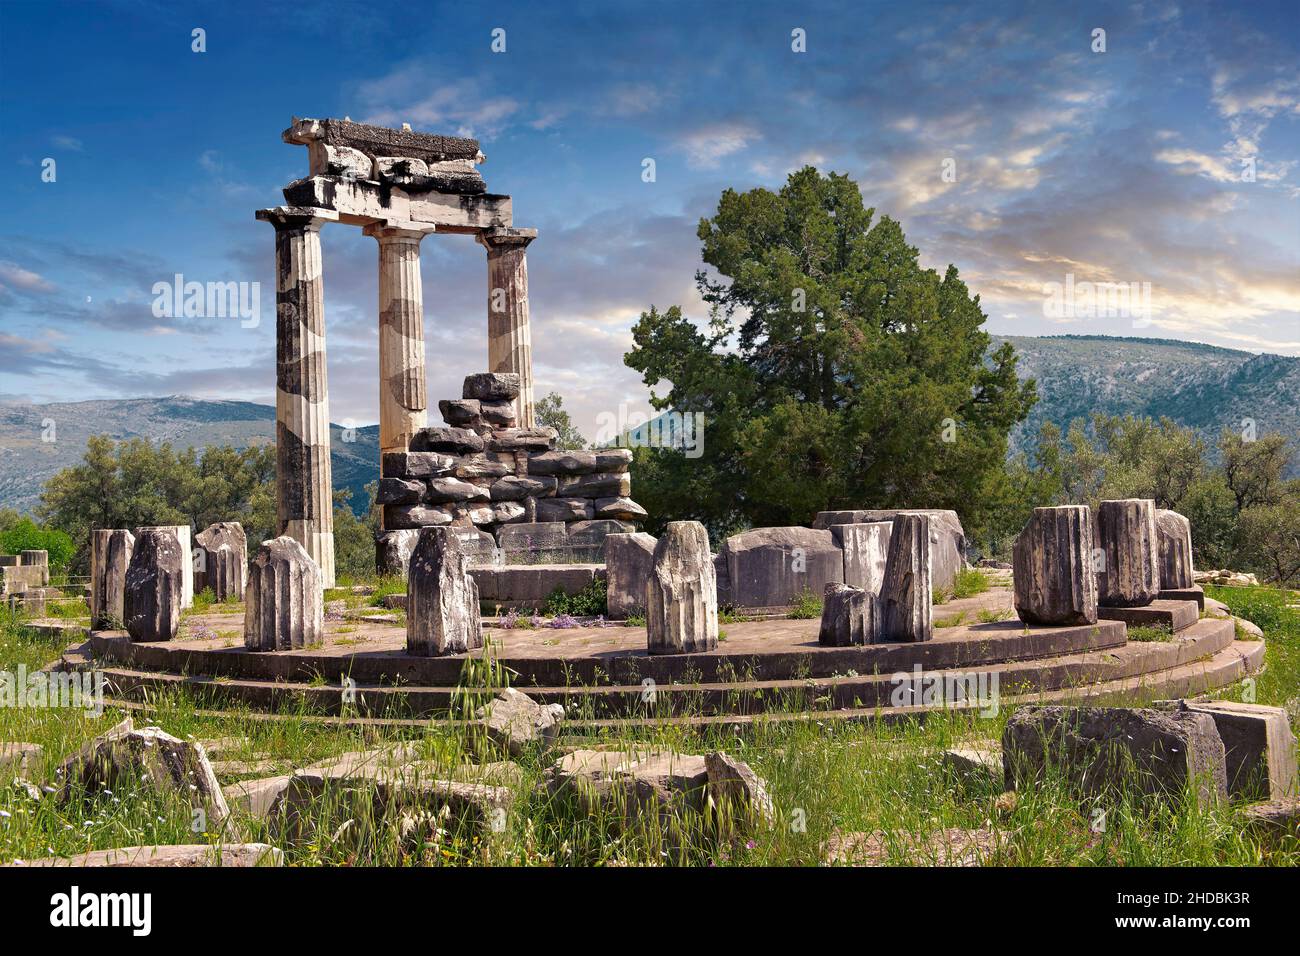 The circular Delphi Tholos temple with Doric columns, 380 BC, Sanctuary of Athena Pronaia, Delphi Archaeological Site,  Greece Stock Photo